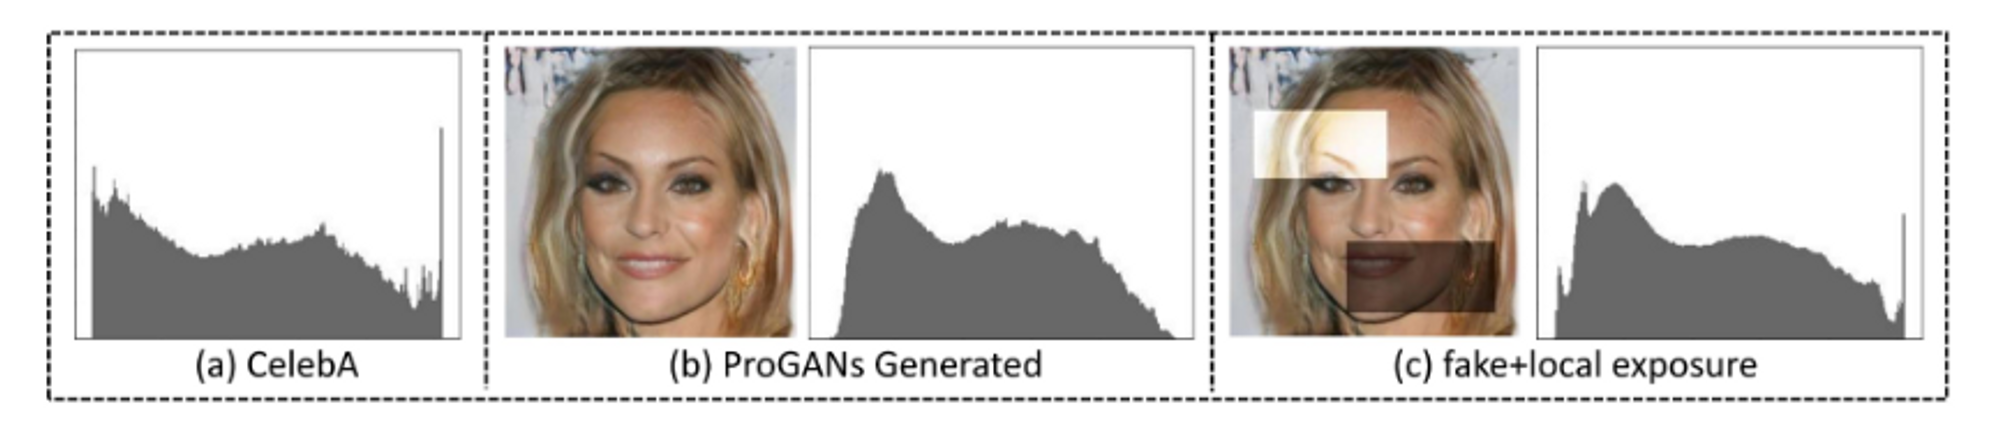 fig2.亮度统计差异。(a)展示了自然人脸数据集的平均亮度直方图，(b)展示了ProGAN生成的缺乏饱和曝光不足区域的伪造人脸数据集的平均亮度直方图。(c)是与(b)部分曝光调整相同的数据集。调整局部亮度后，伪图像直方图中出现饱和和欠曝光像素值。